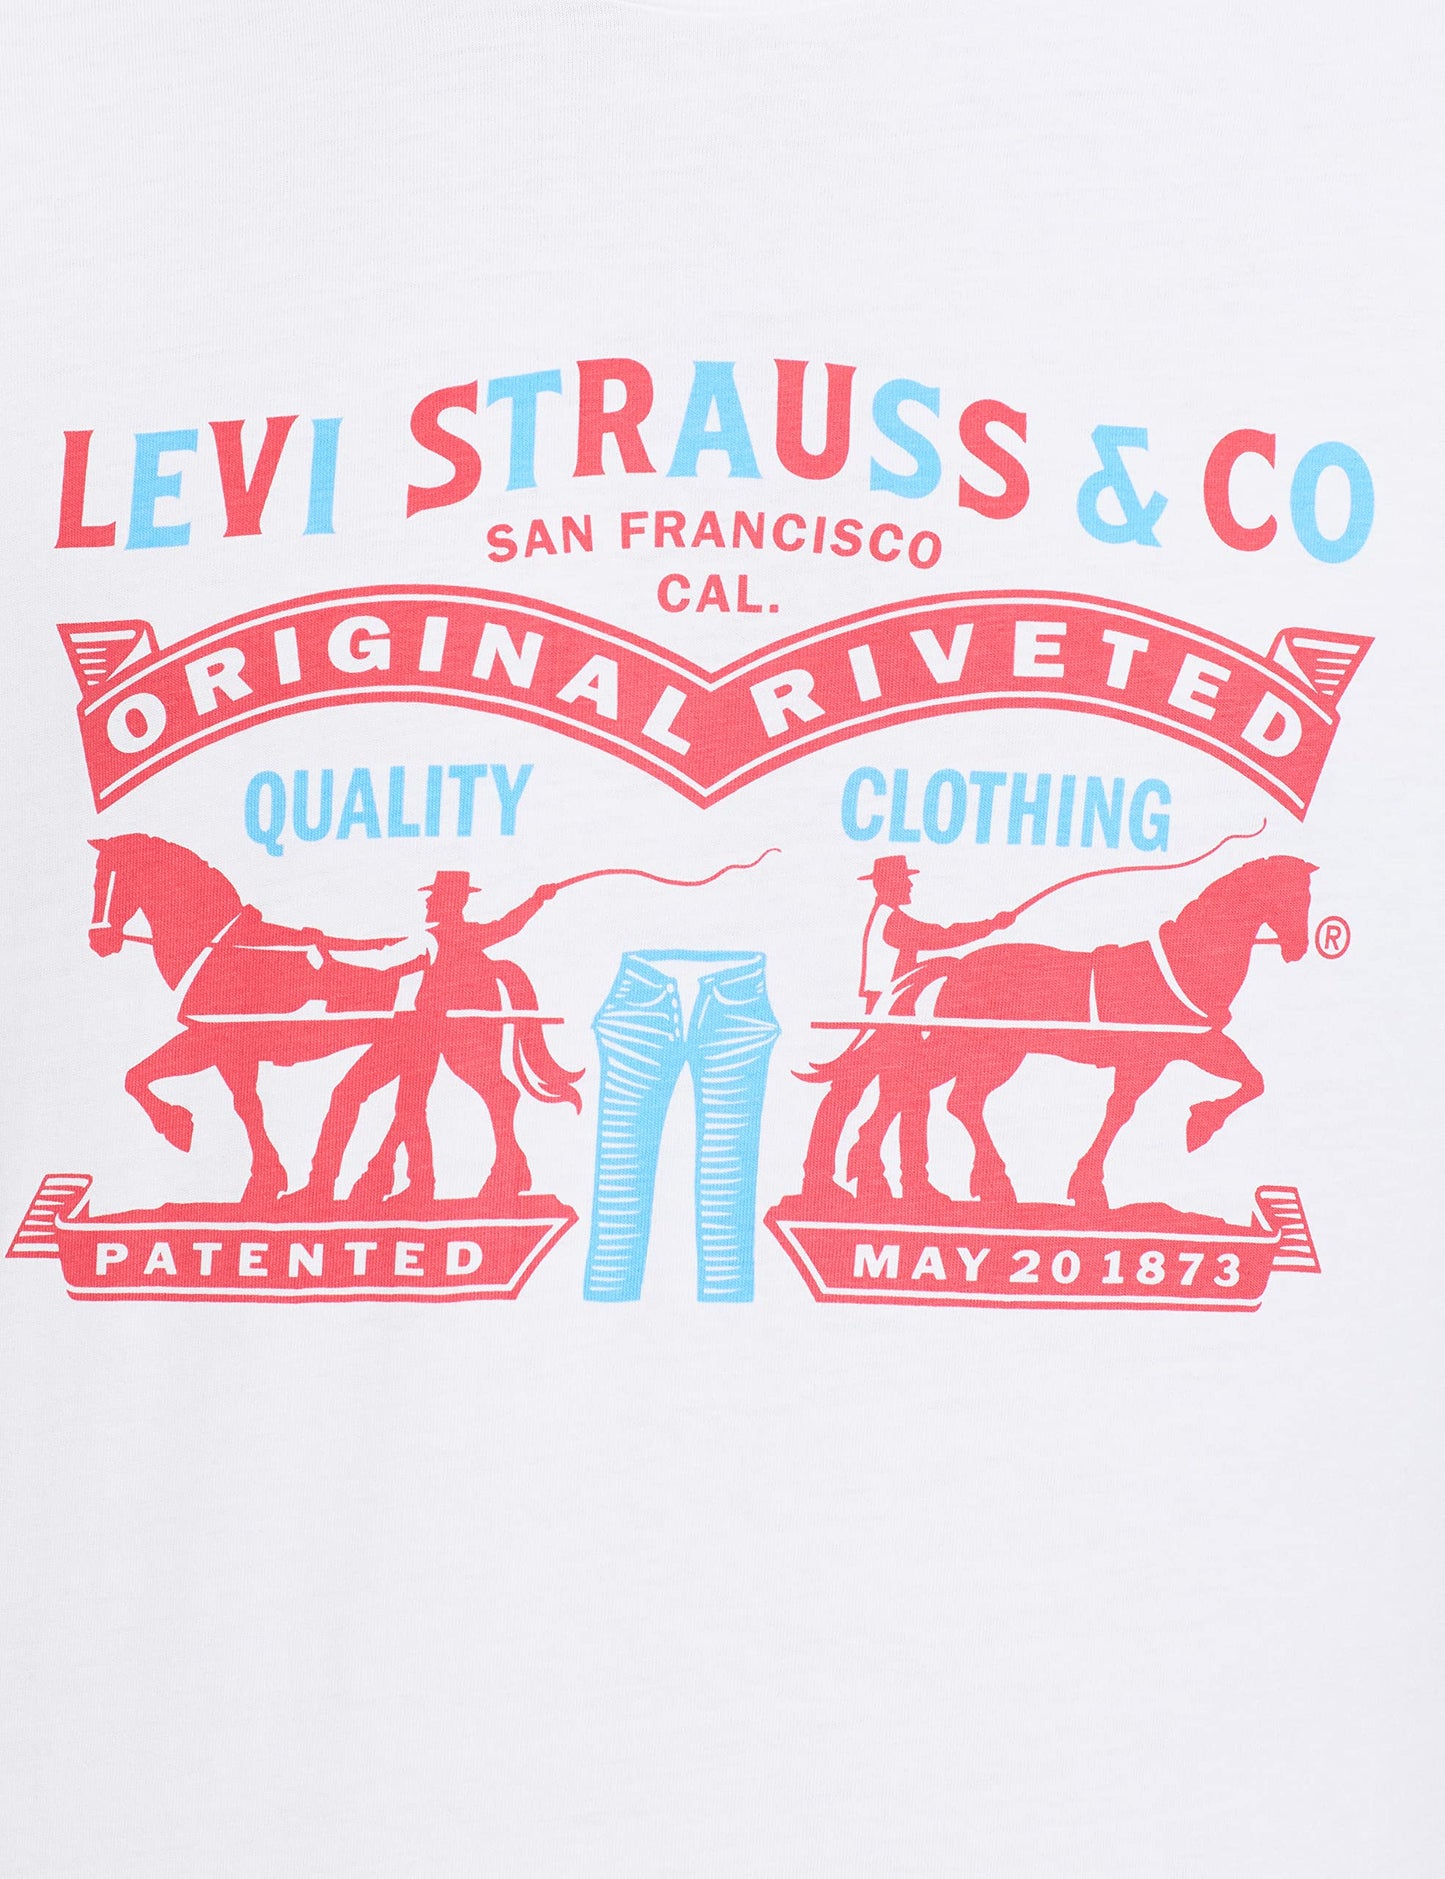 Levi's Men's Regular T-Shirt (16960-0788_Brilliant White S)